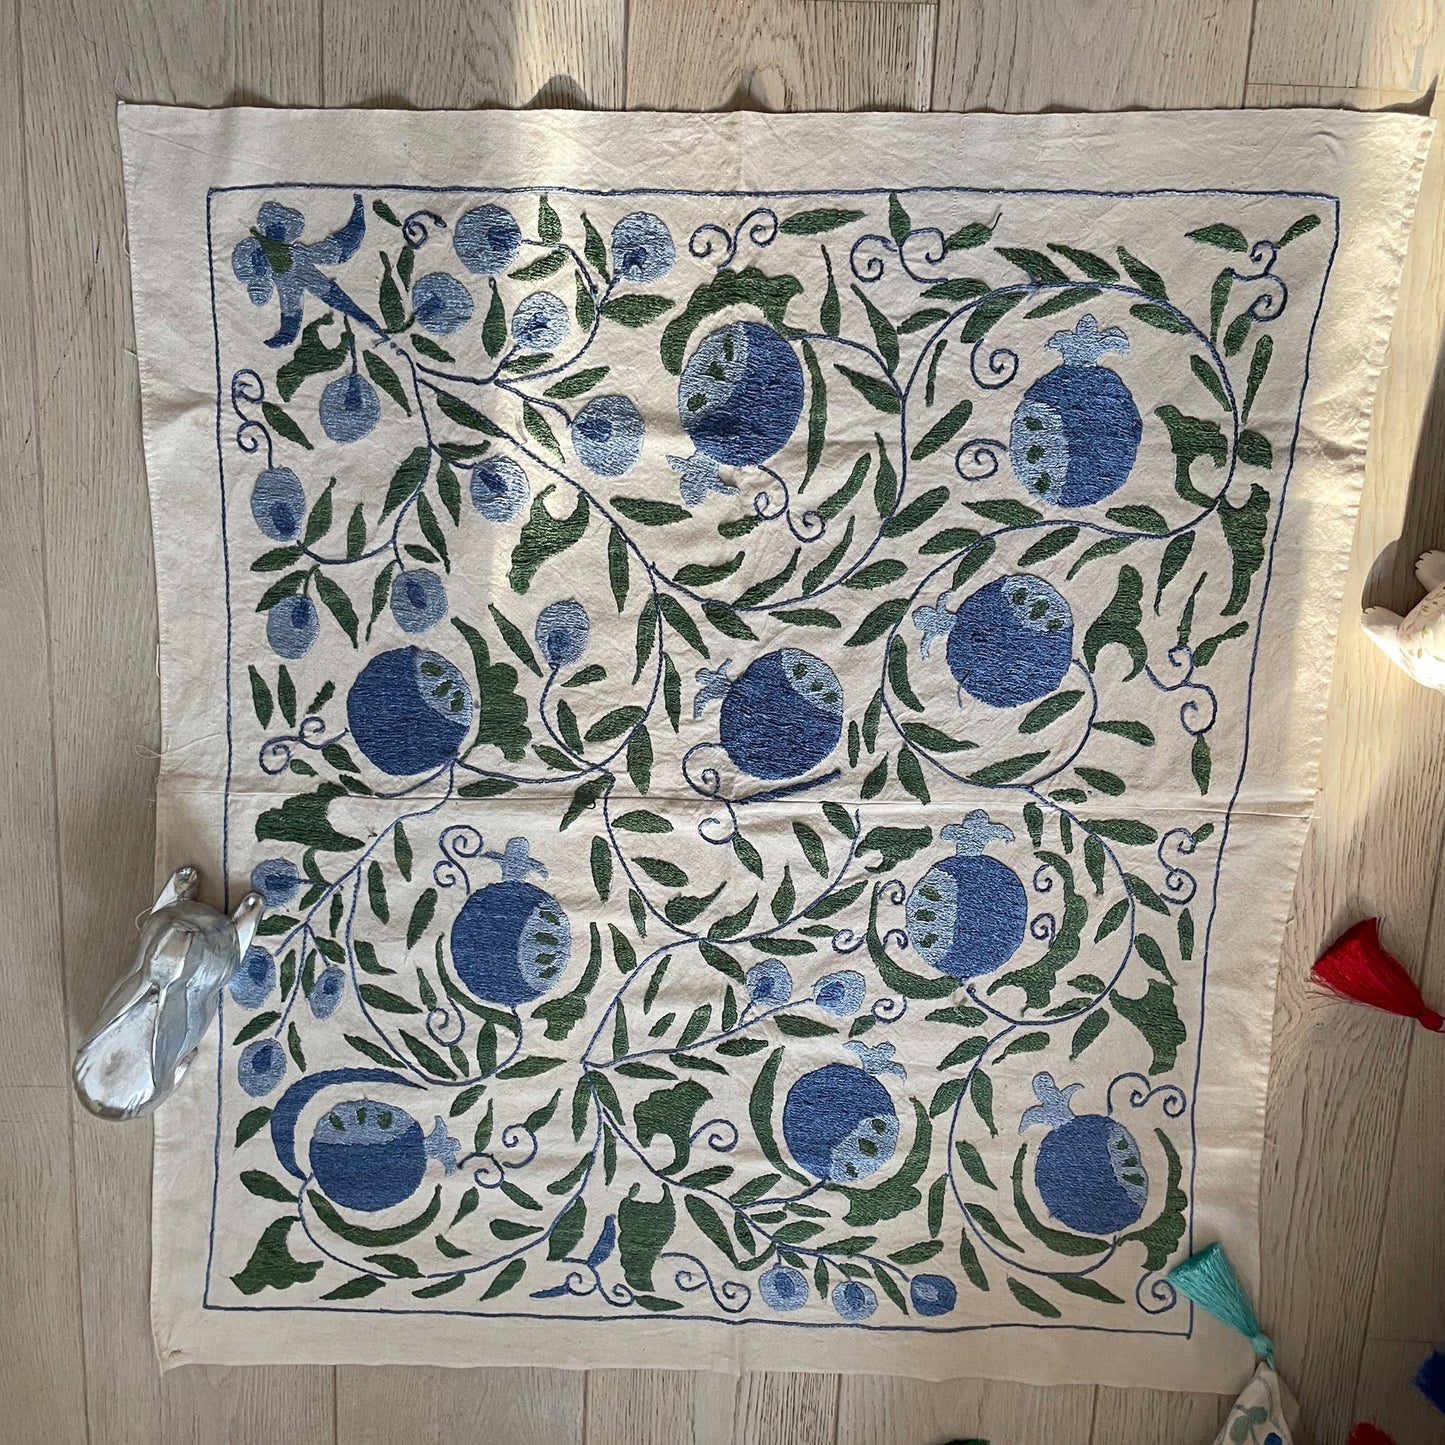 Uzbeki Suzani Hand Embroidered Textile Wall Hanging | Home Décor | Square | 100cm x 100cm SUZ0410001 - Wildash London